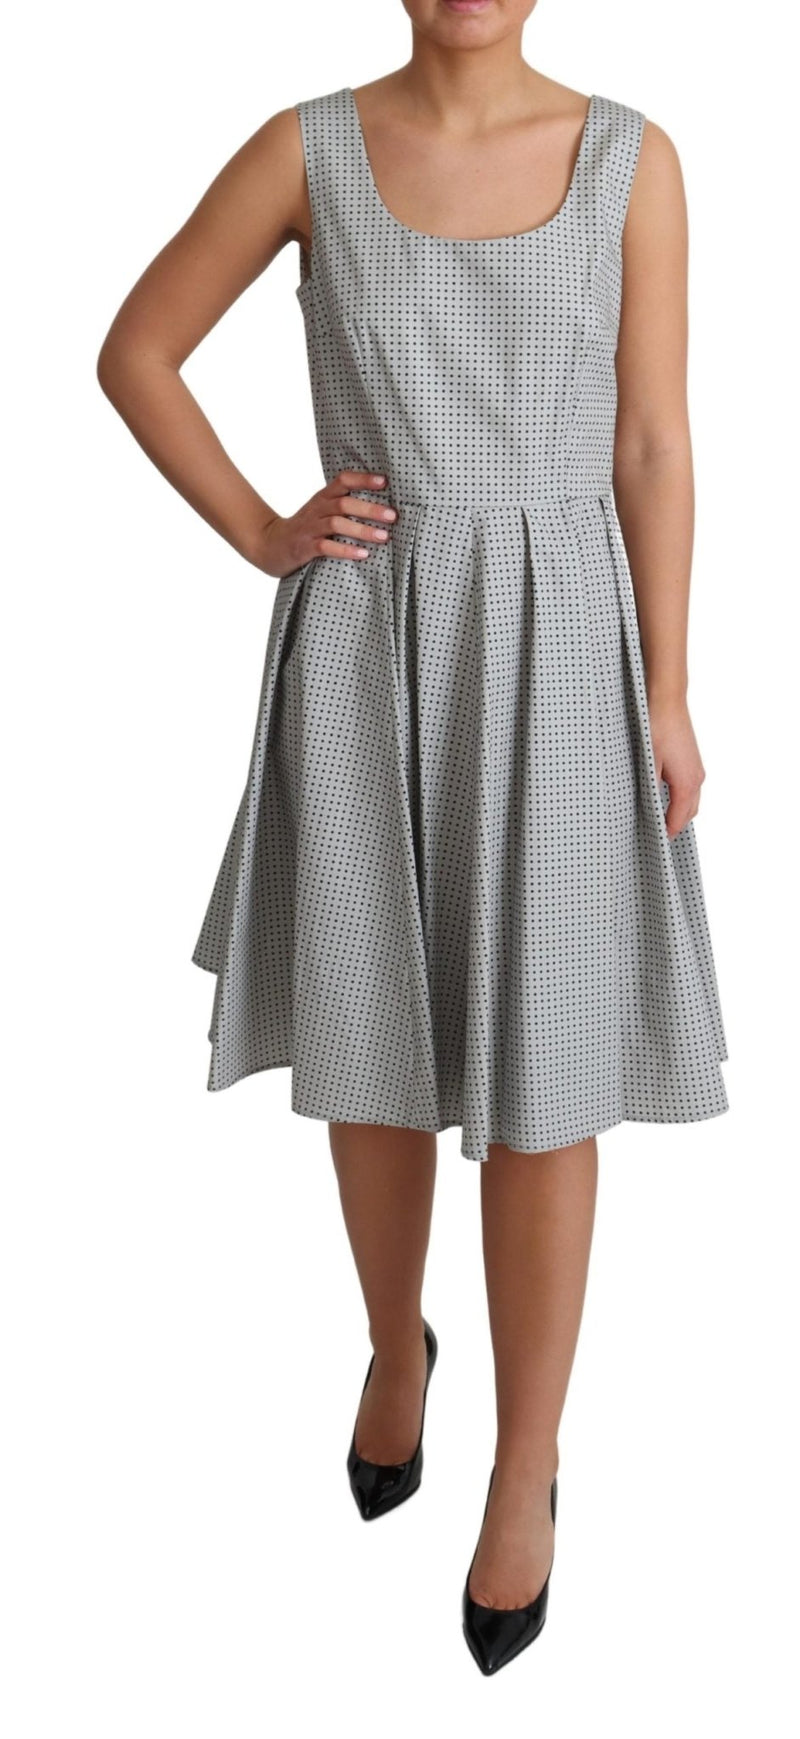 Gray Polka Dotted Cotton A-Line Dress - Avaz Shop